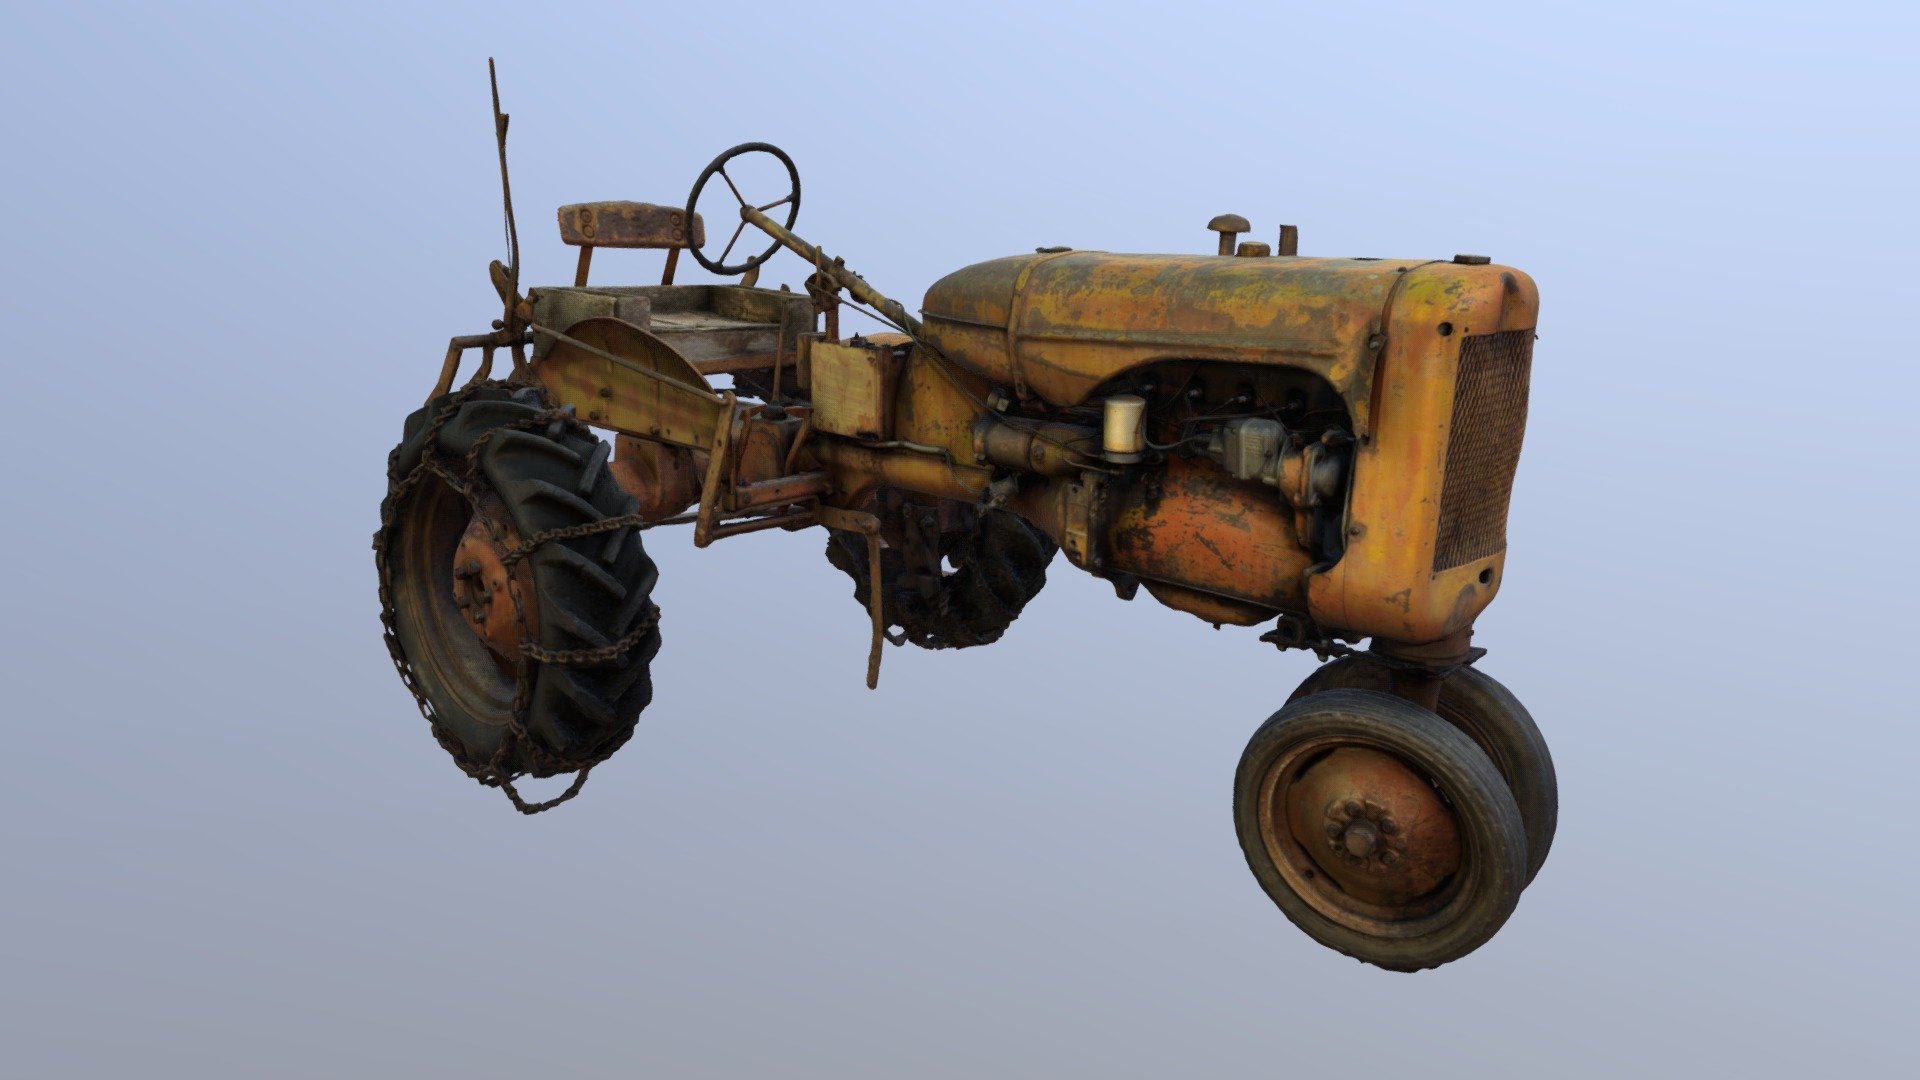 Allis Chalmers Tractor Model By Nebraska Public Media [105b577]